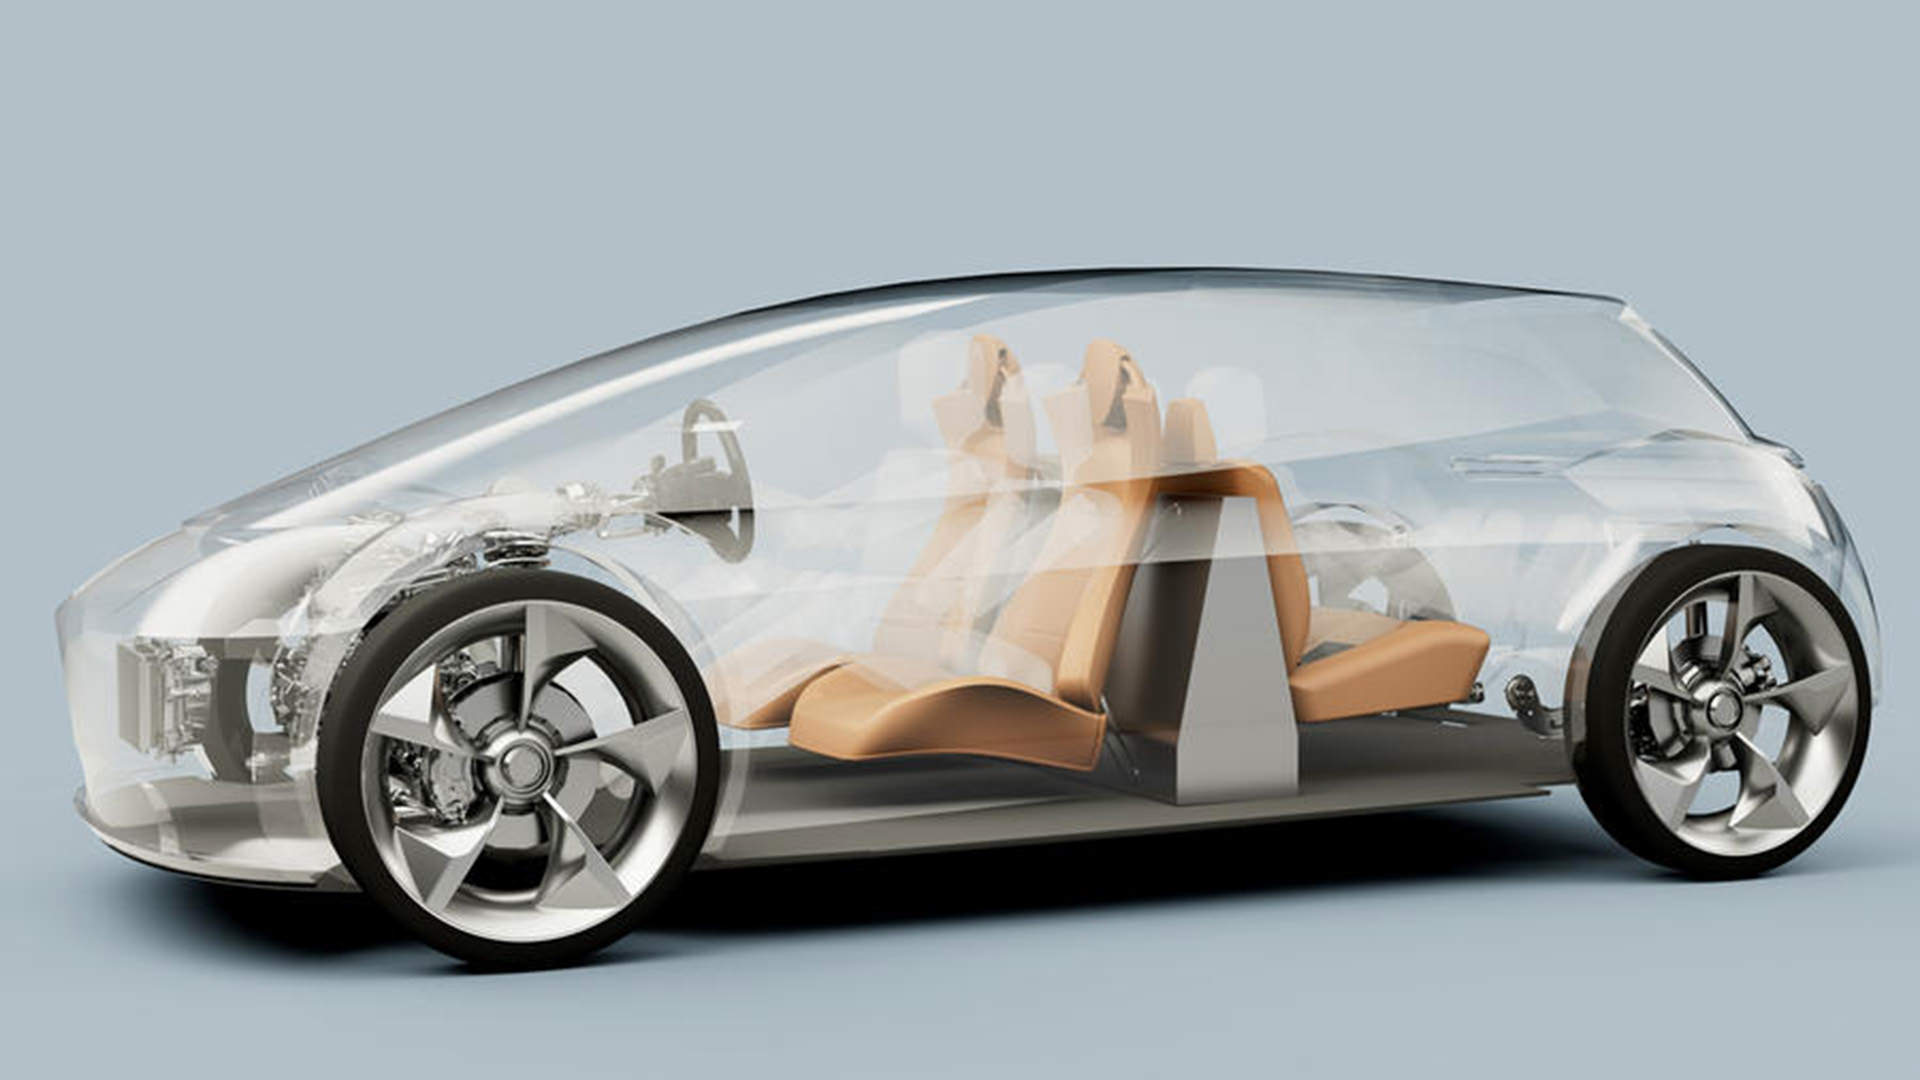 نمای جانبی خودروی الکتریکی مفهومی پیج رابرتس / Page-Roberts concept electric car